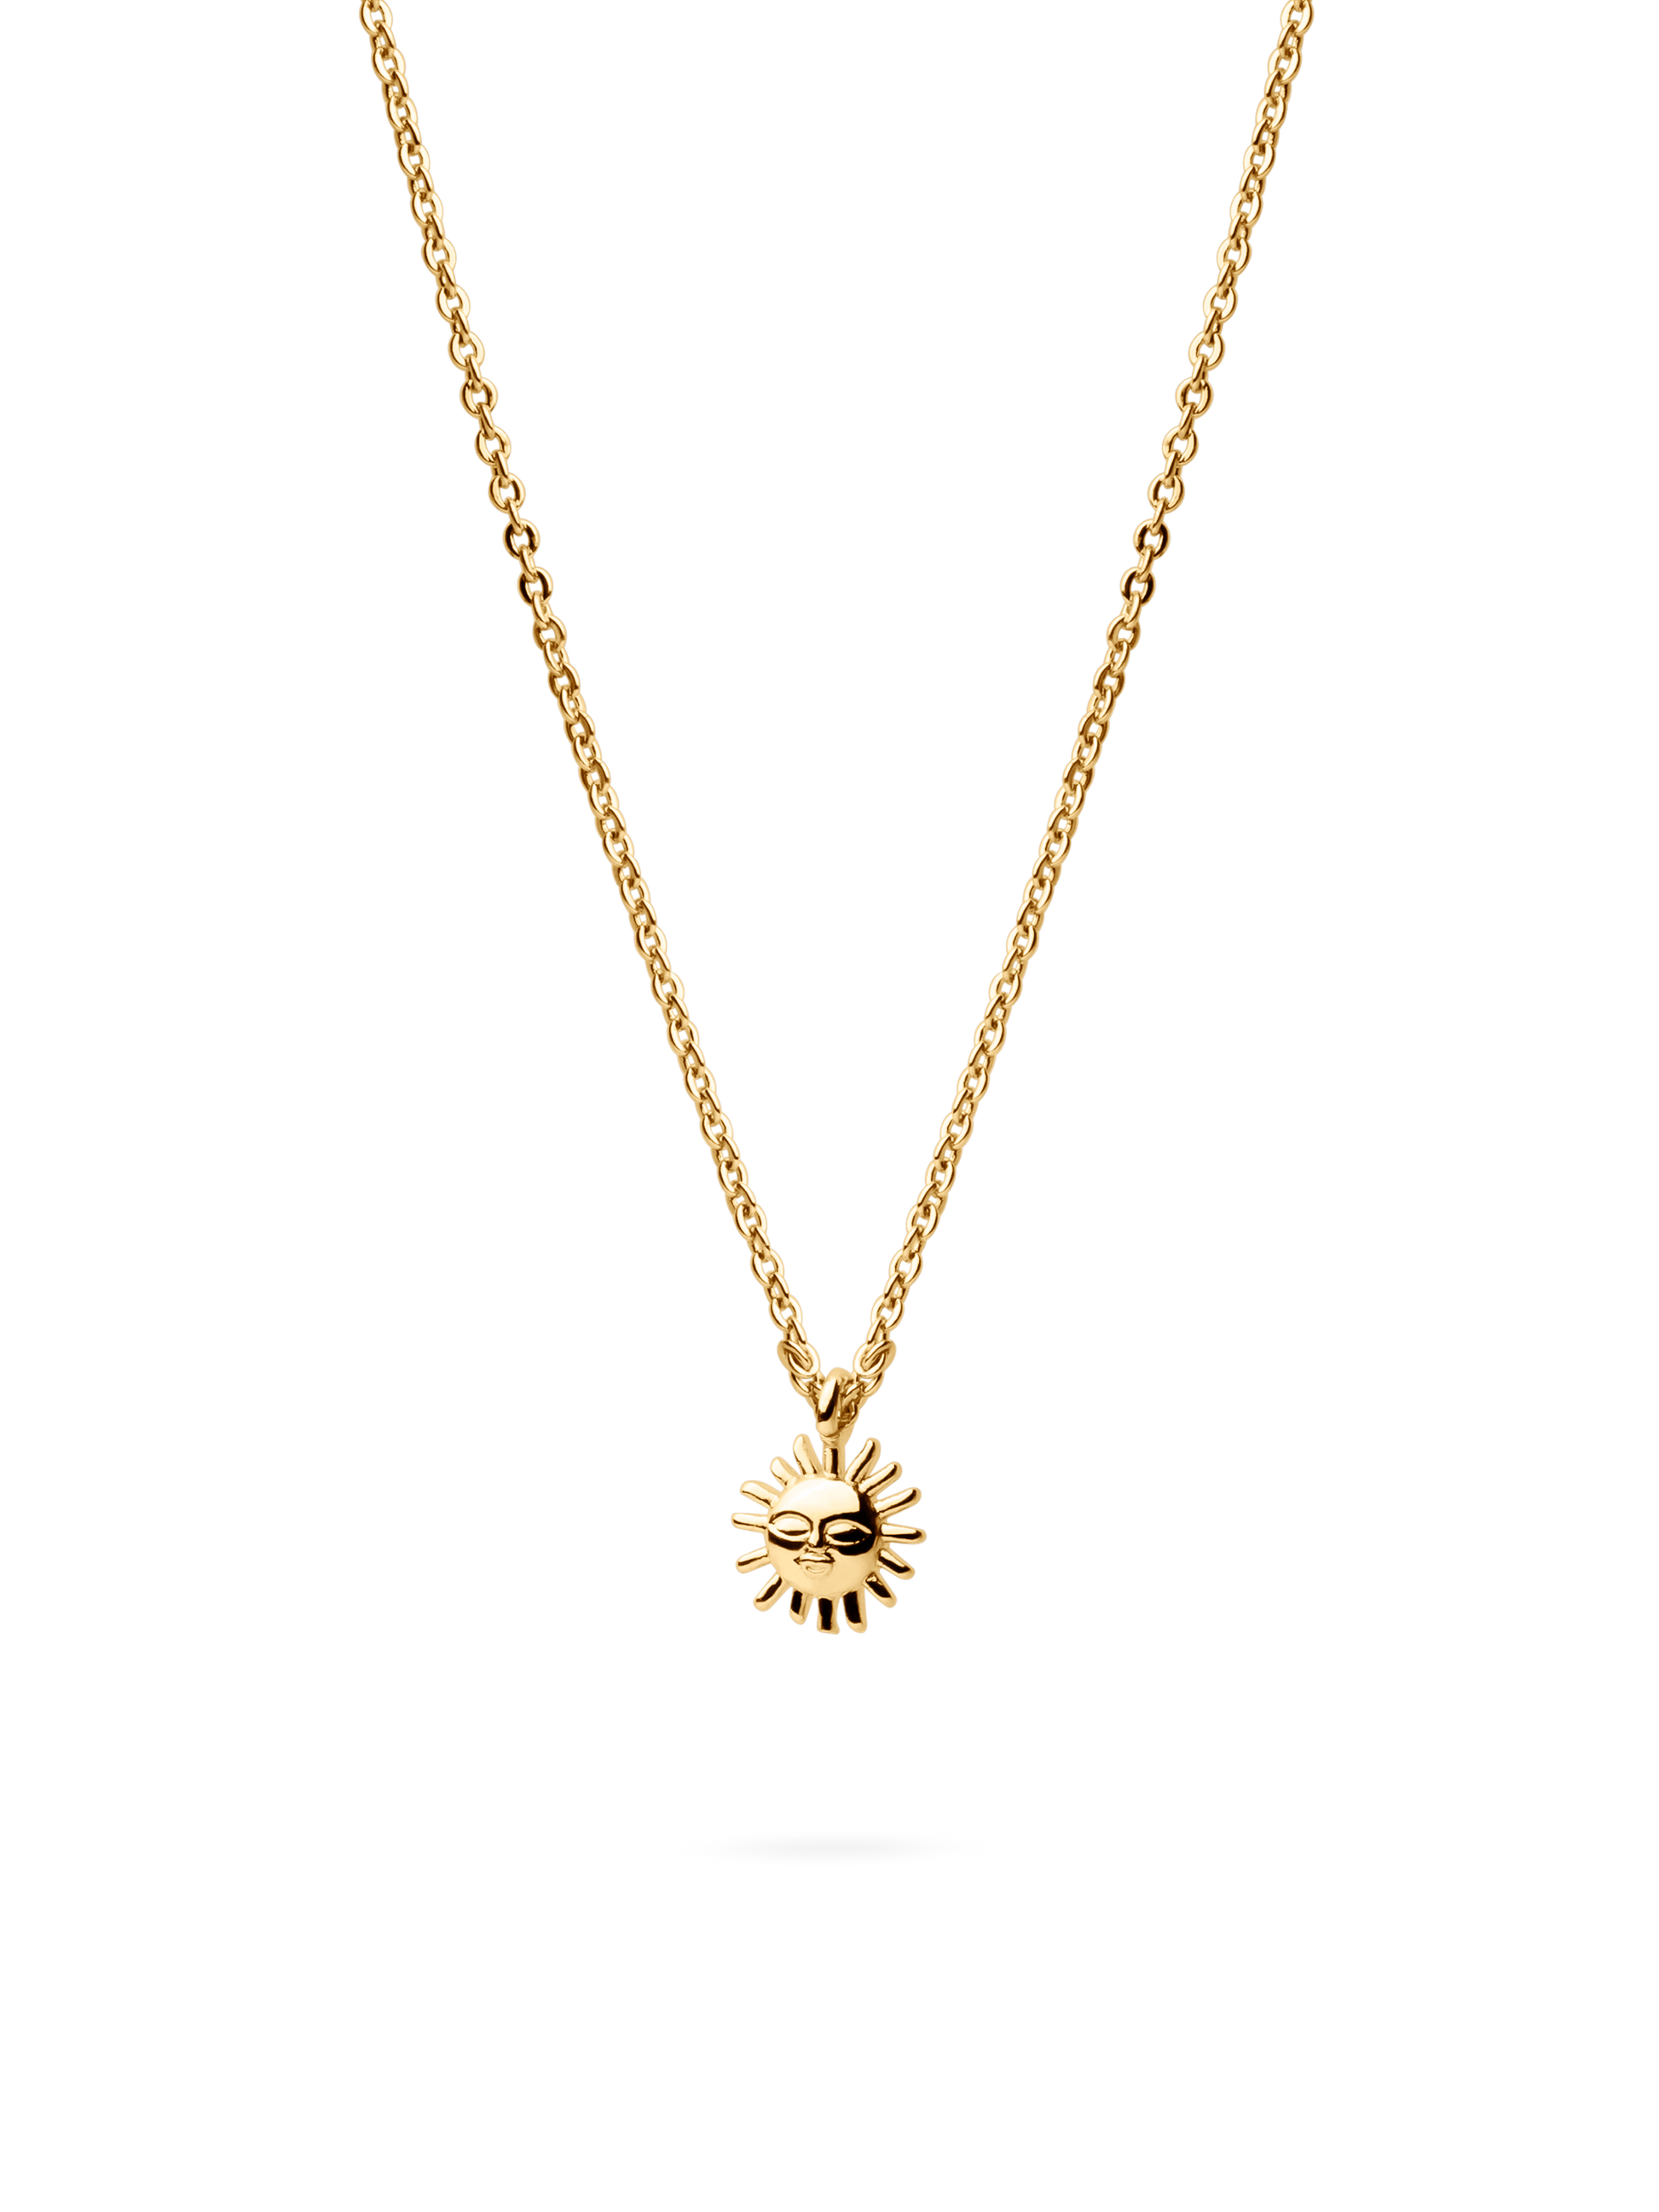 sun necklace 18k gold plated brass